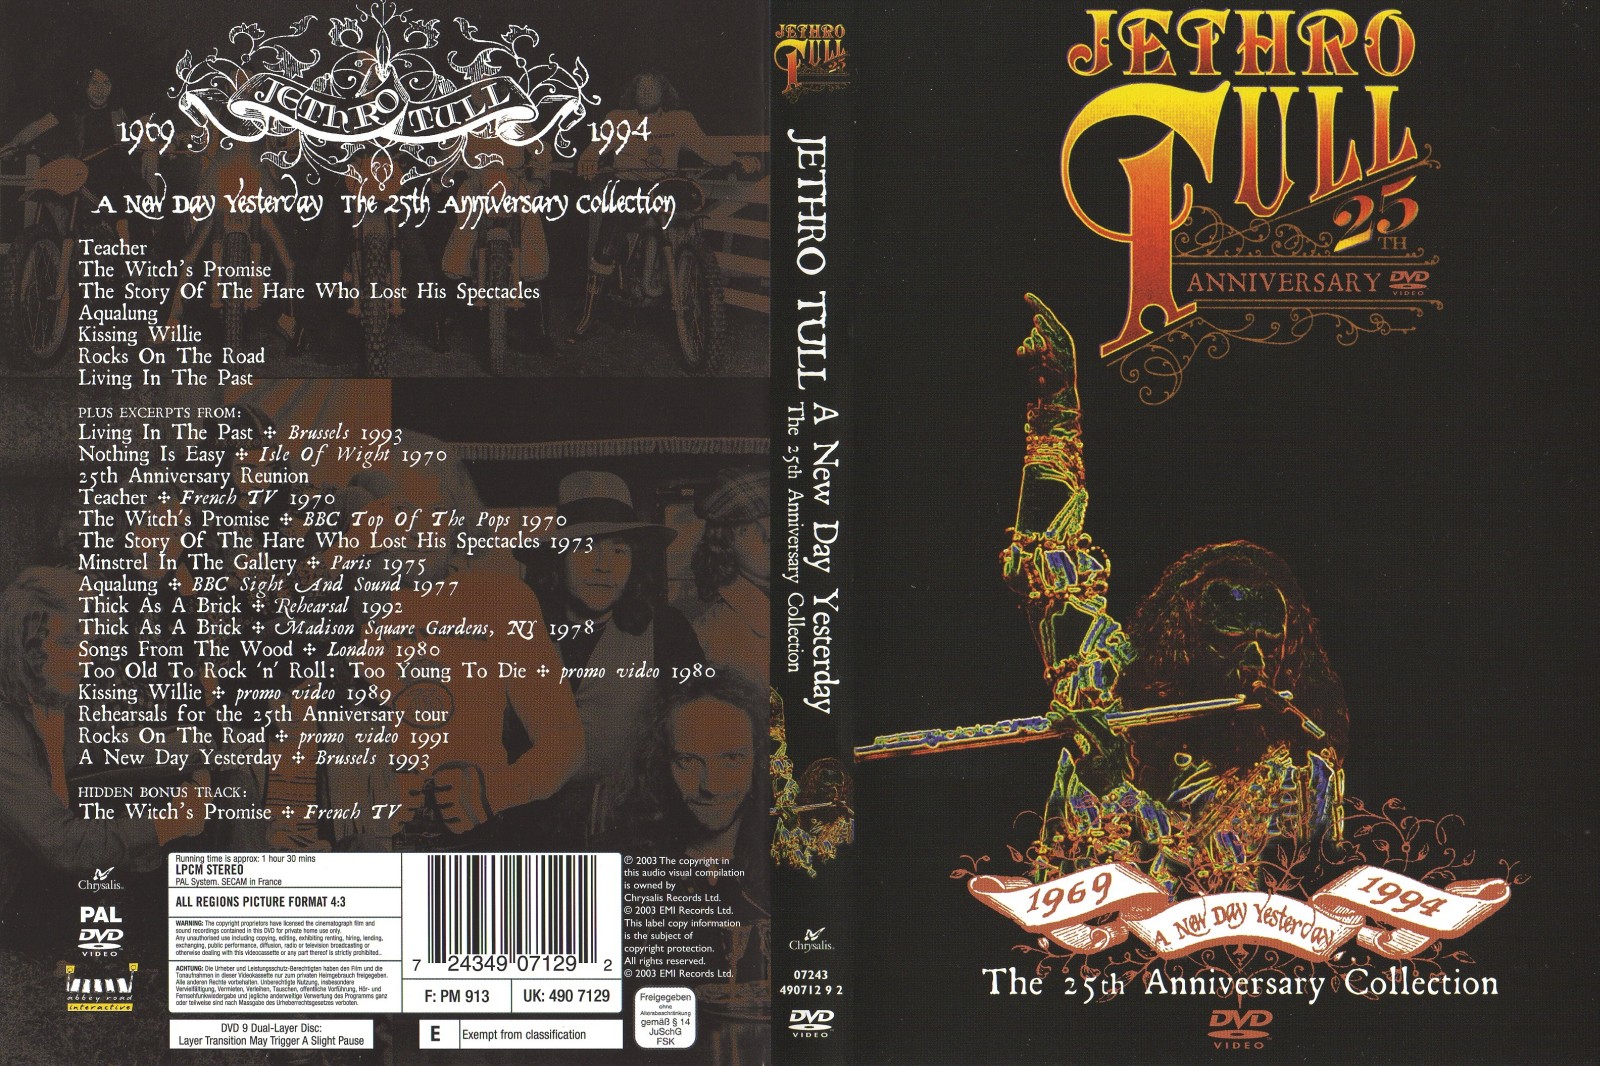 Jaquette DVD Jethro Tull 25th Anniversary